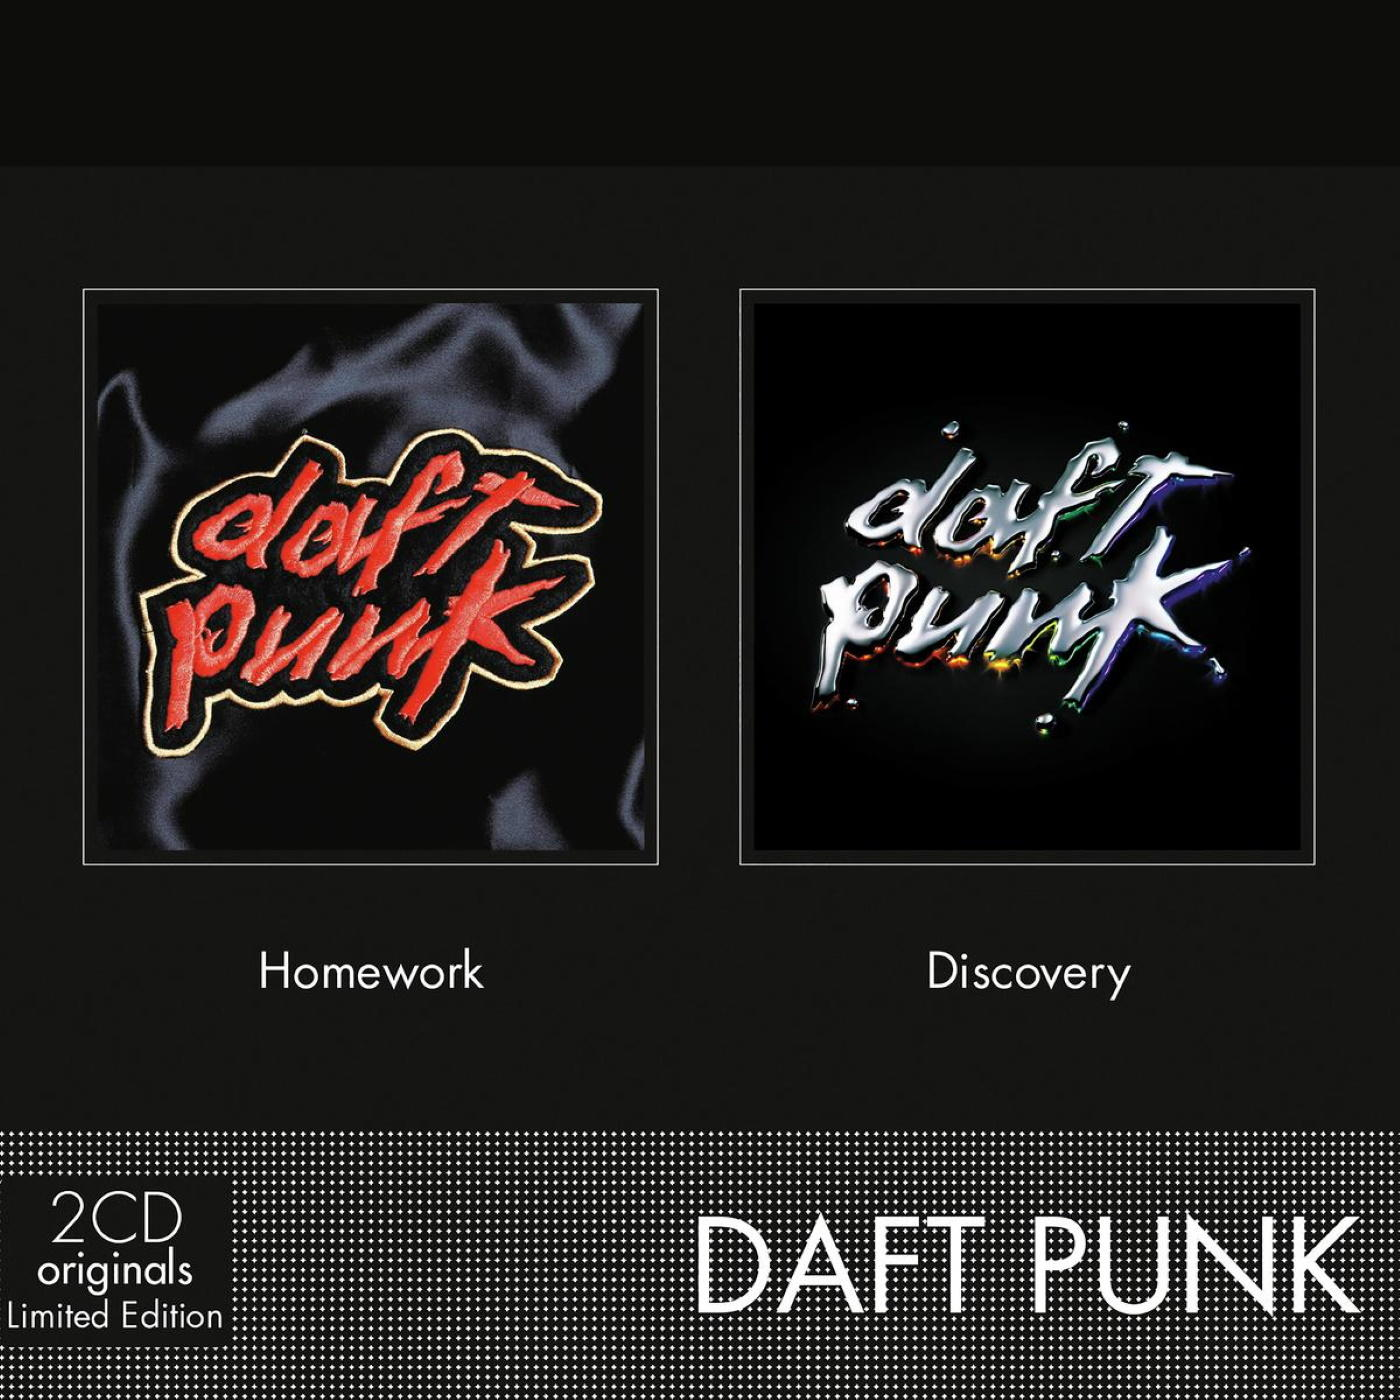 - - (CD) Punk Daft Homework/Discovery